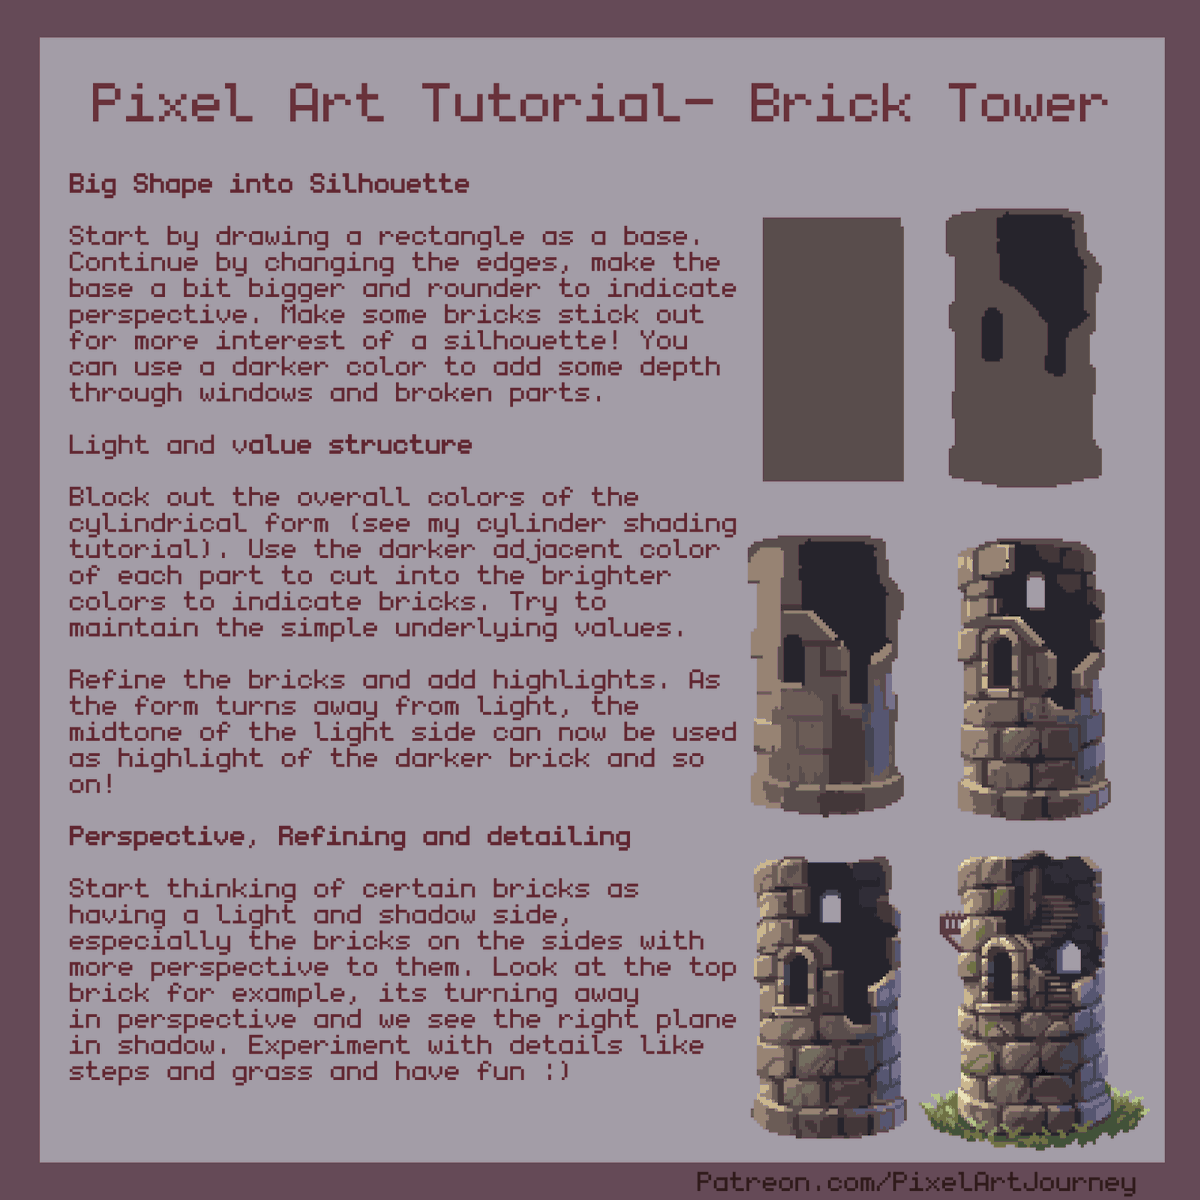 Brick tower tutorial! #pixelart